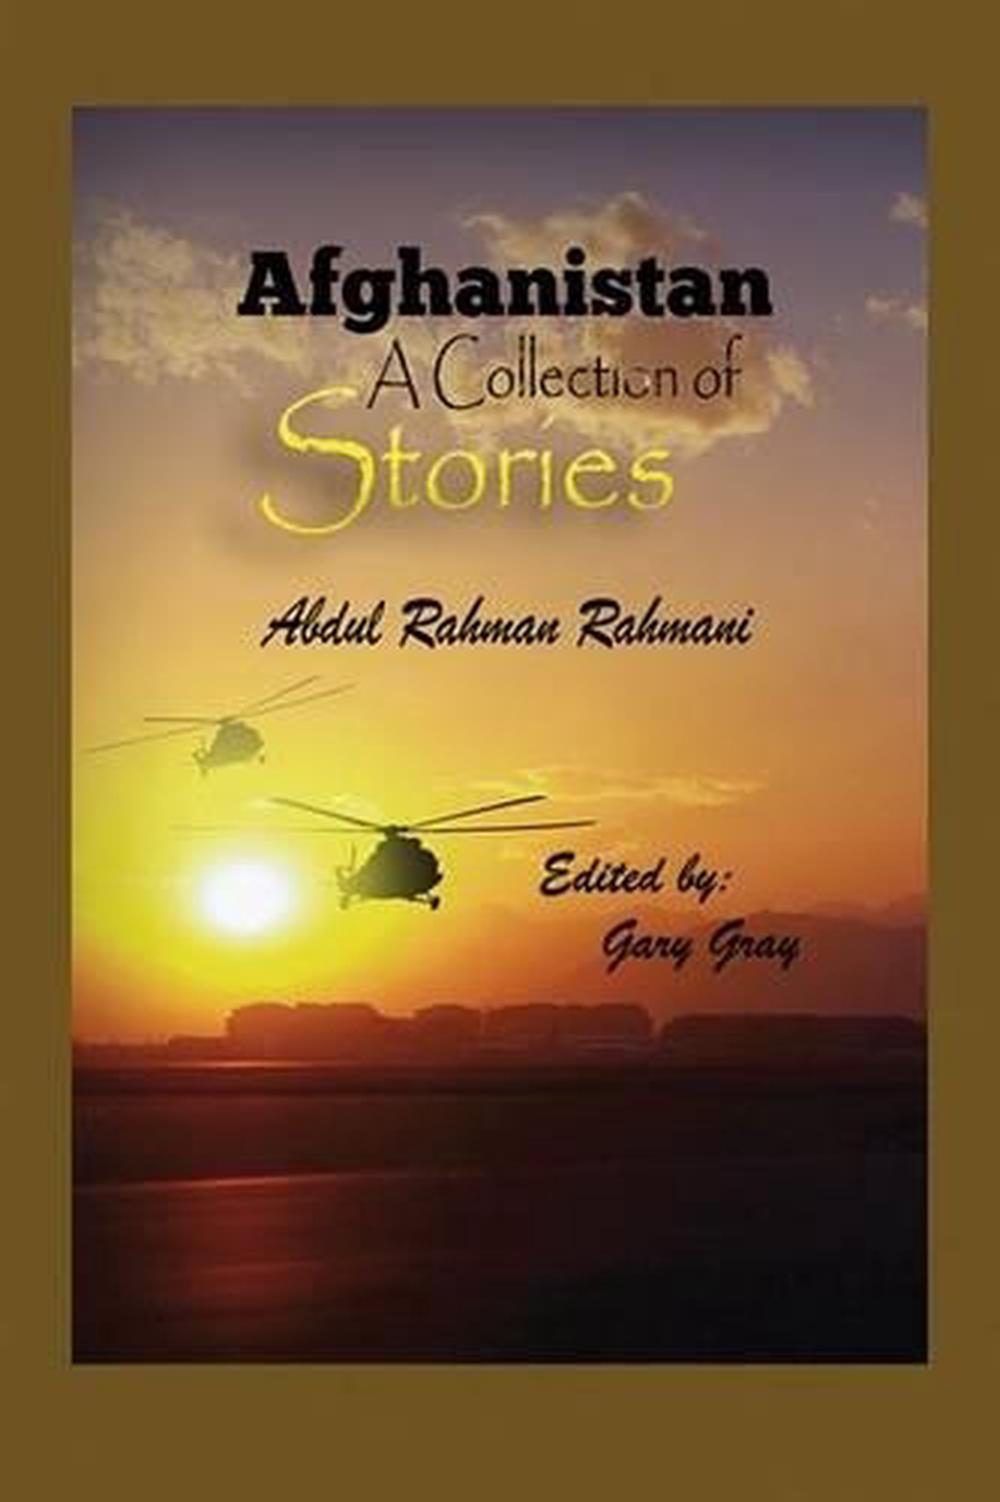 travel books on afghanistan